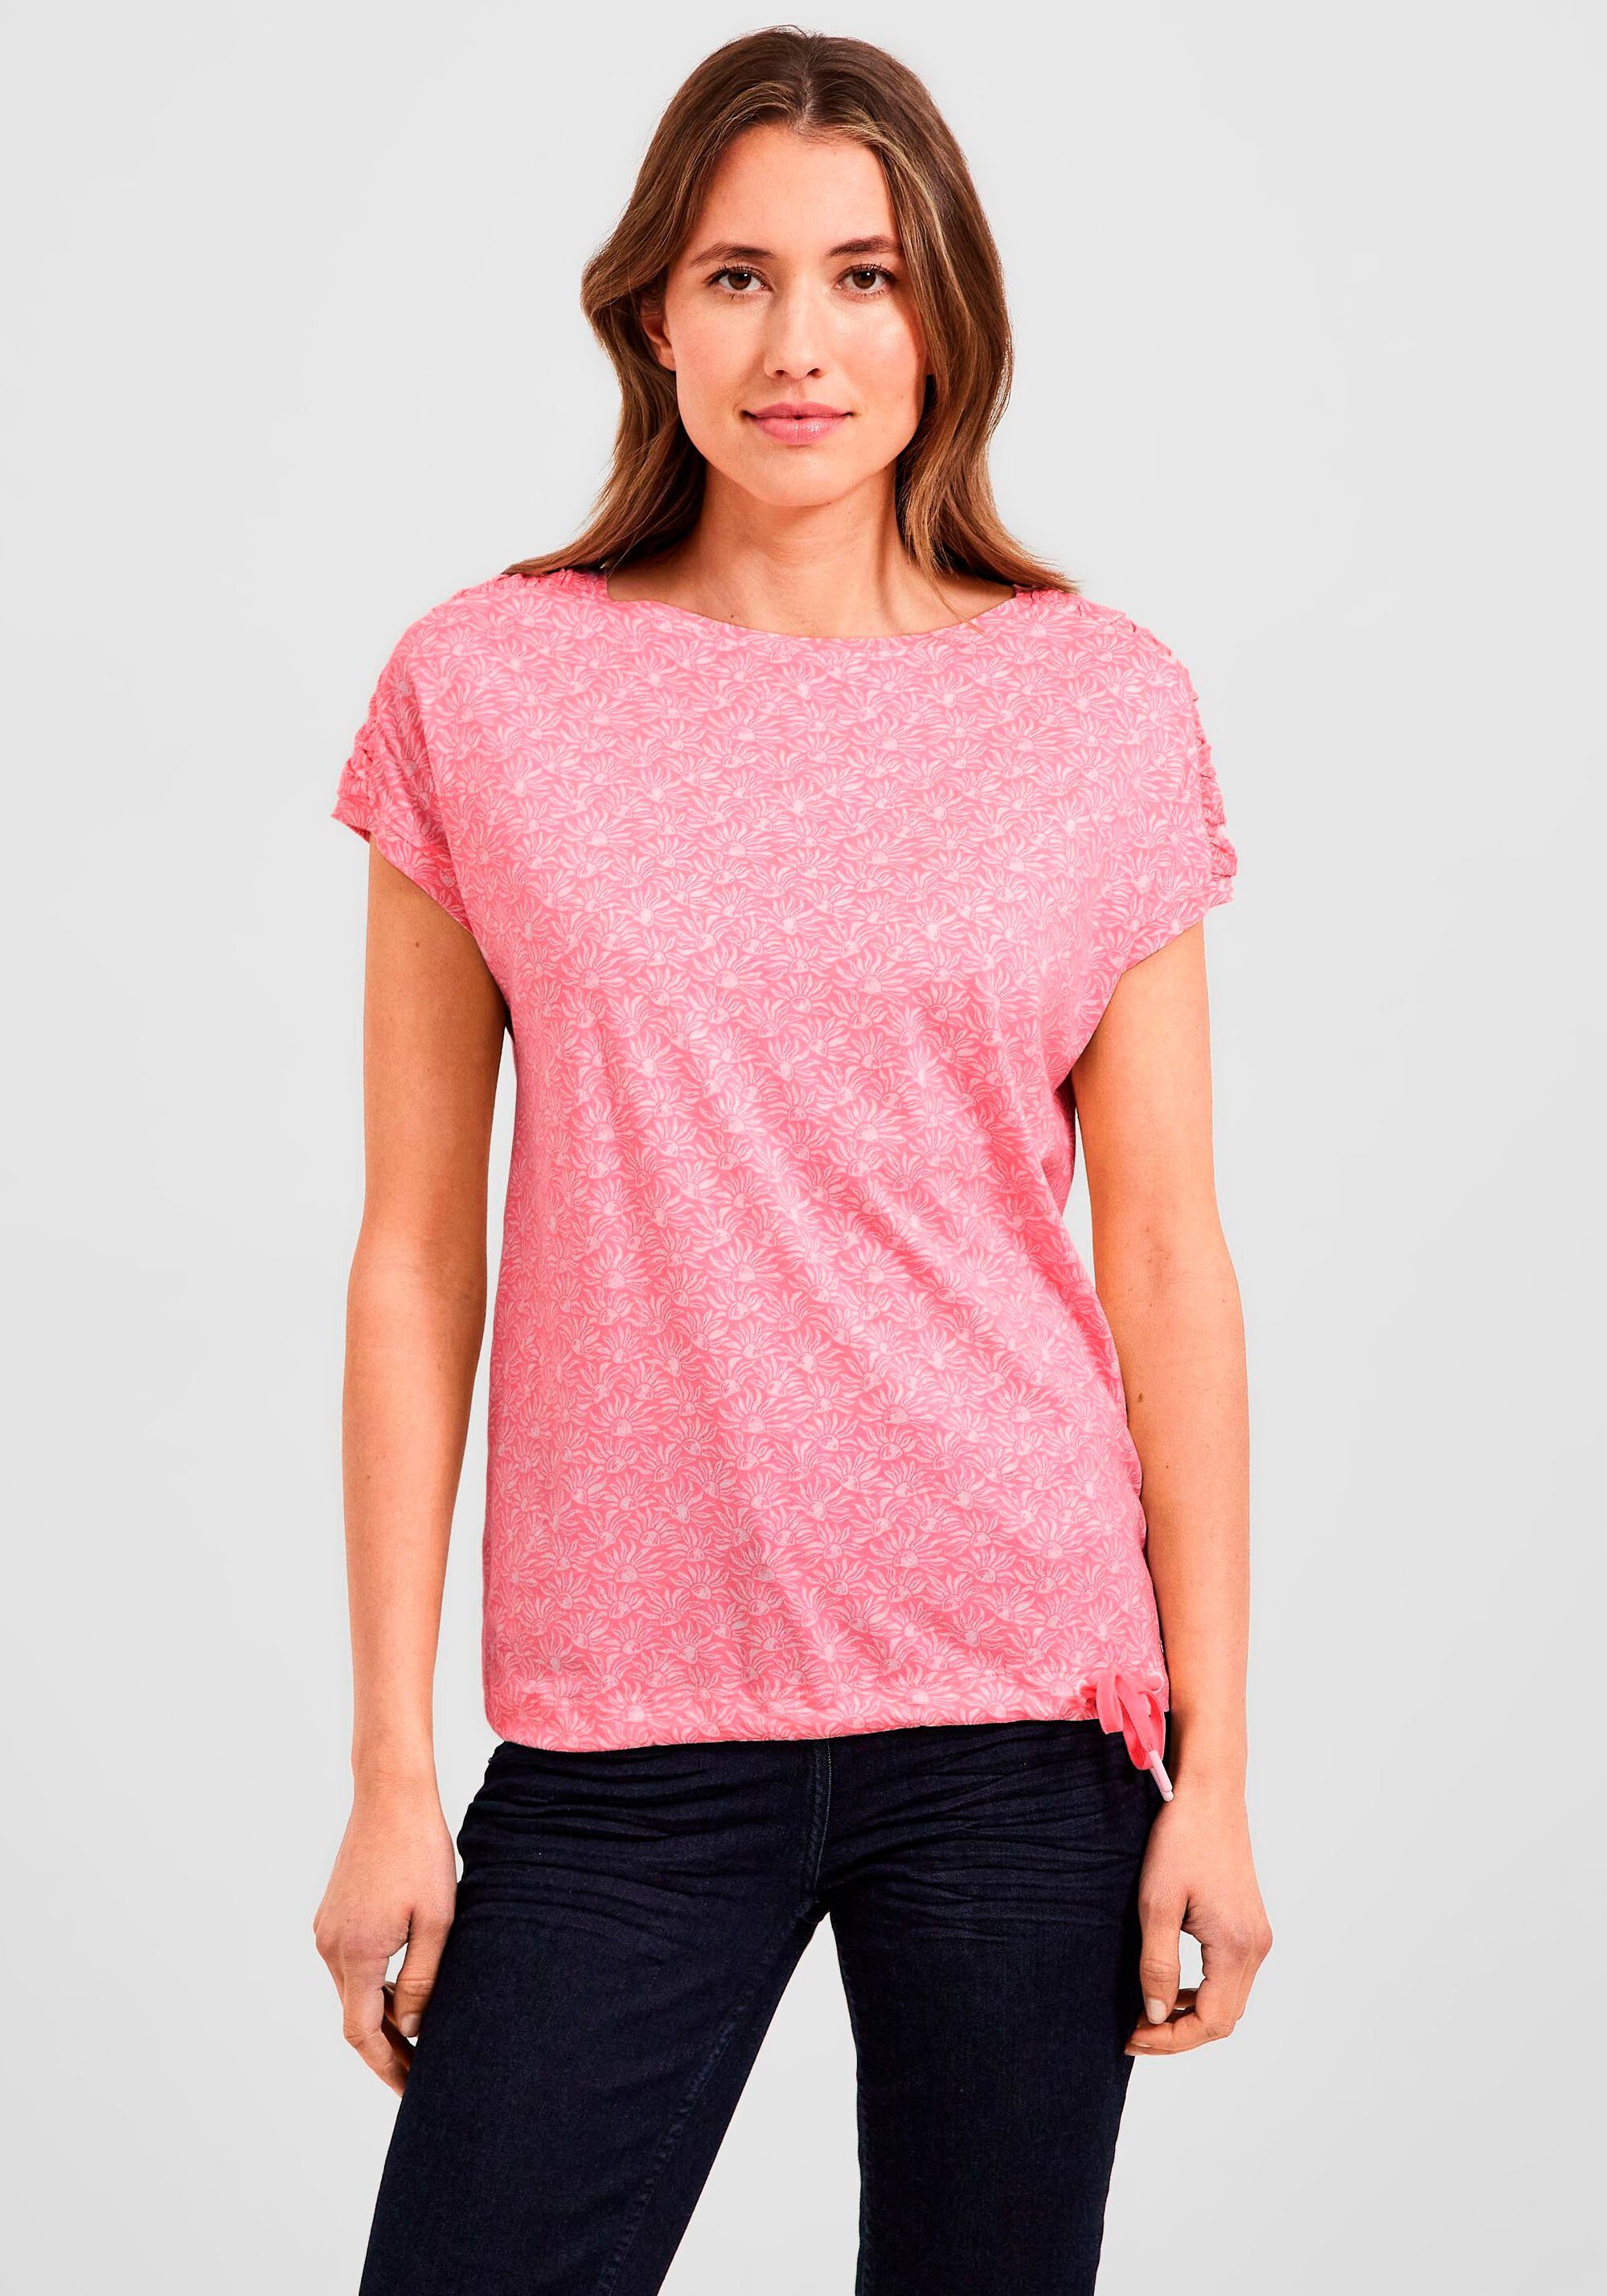 Raffungen Schultern an T-Shirt pink den Cecil mit soft